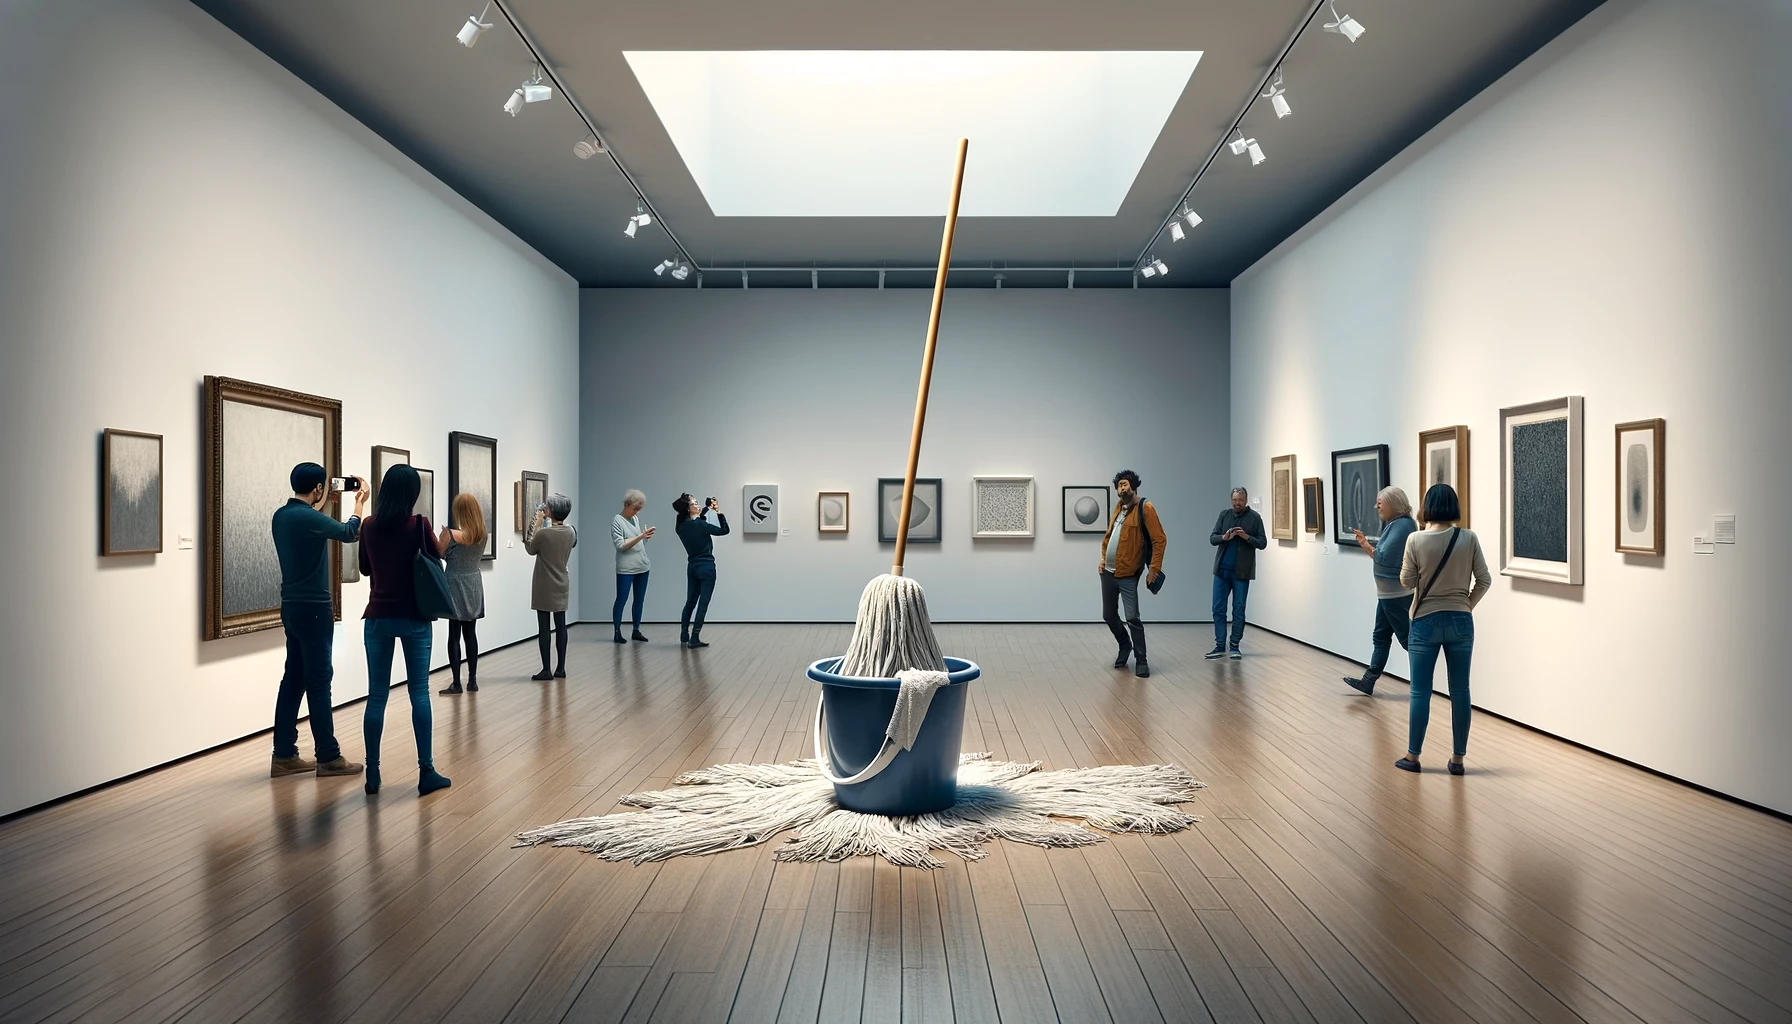 mop-bucket-becomes-minimalist-modern-art-masterpiece-at-museum-csdn